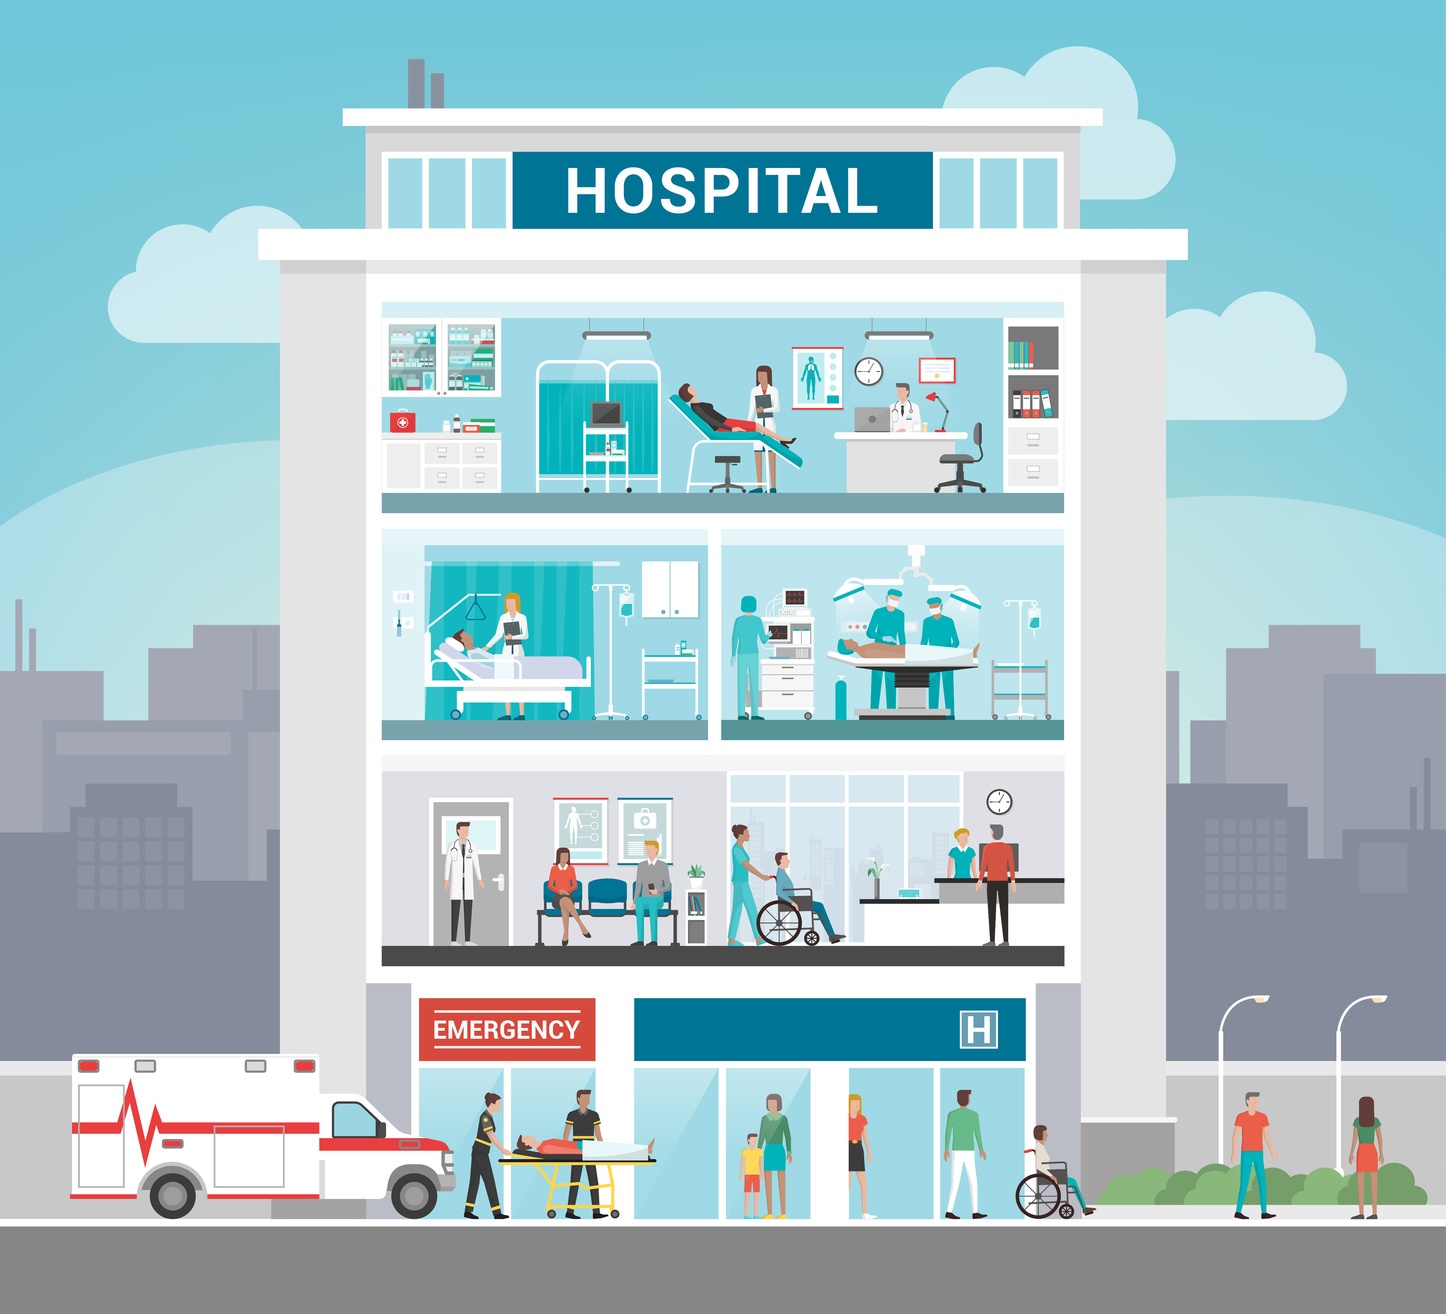 Cartoon image of hospital building